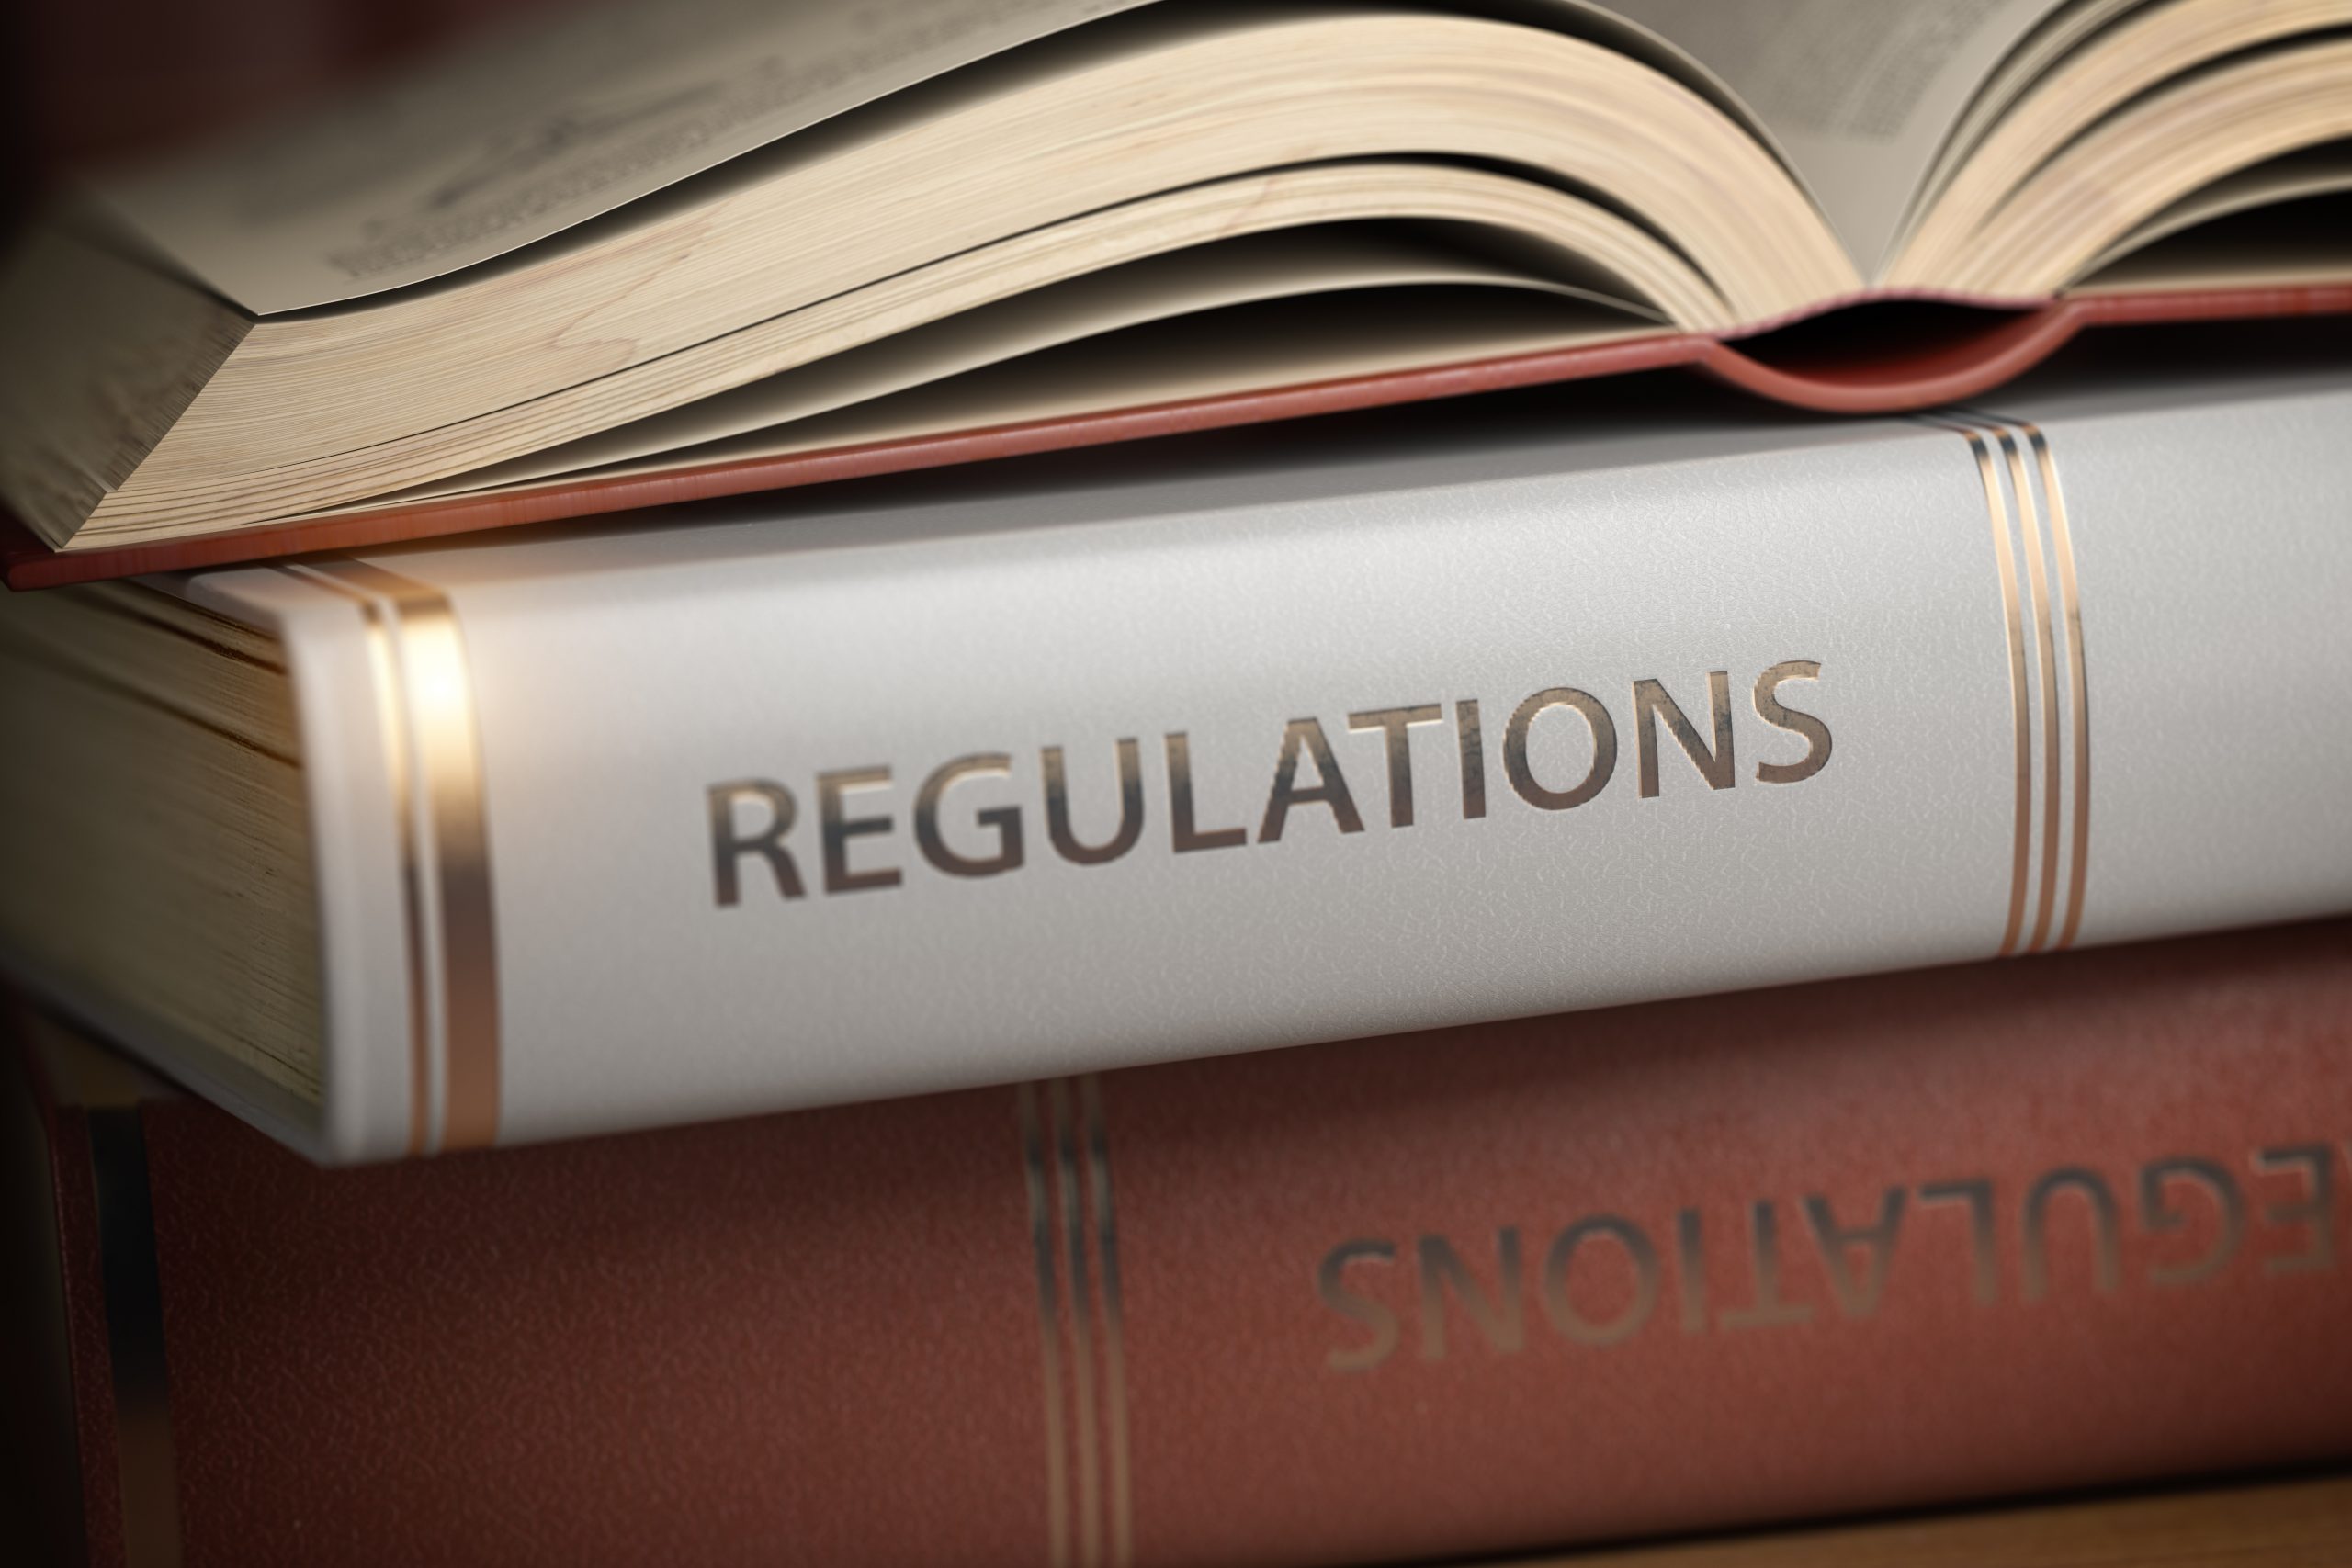 regulations book